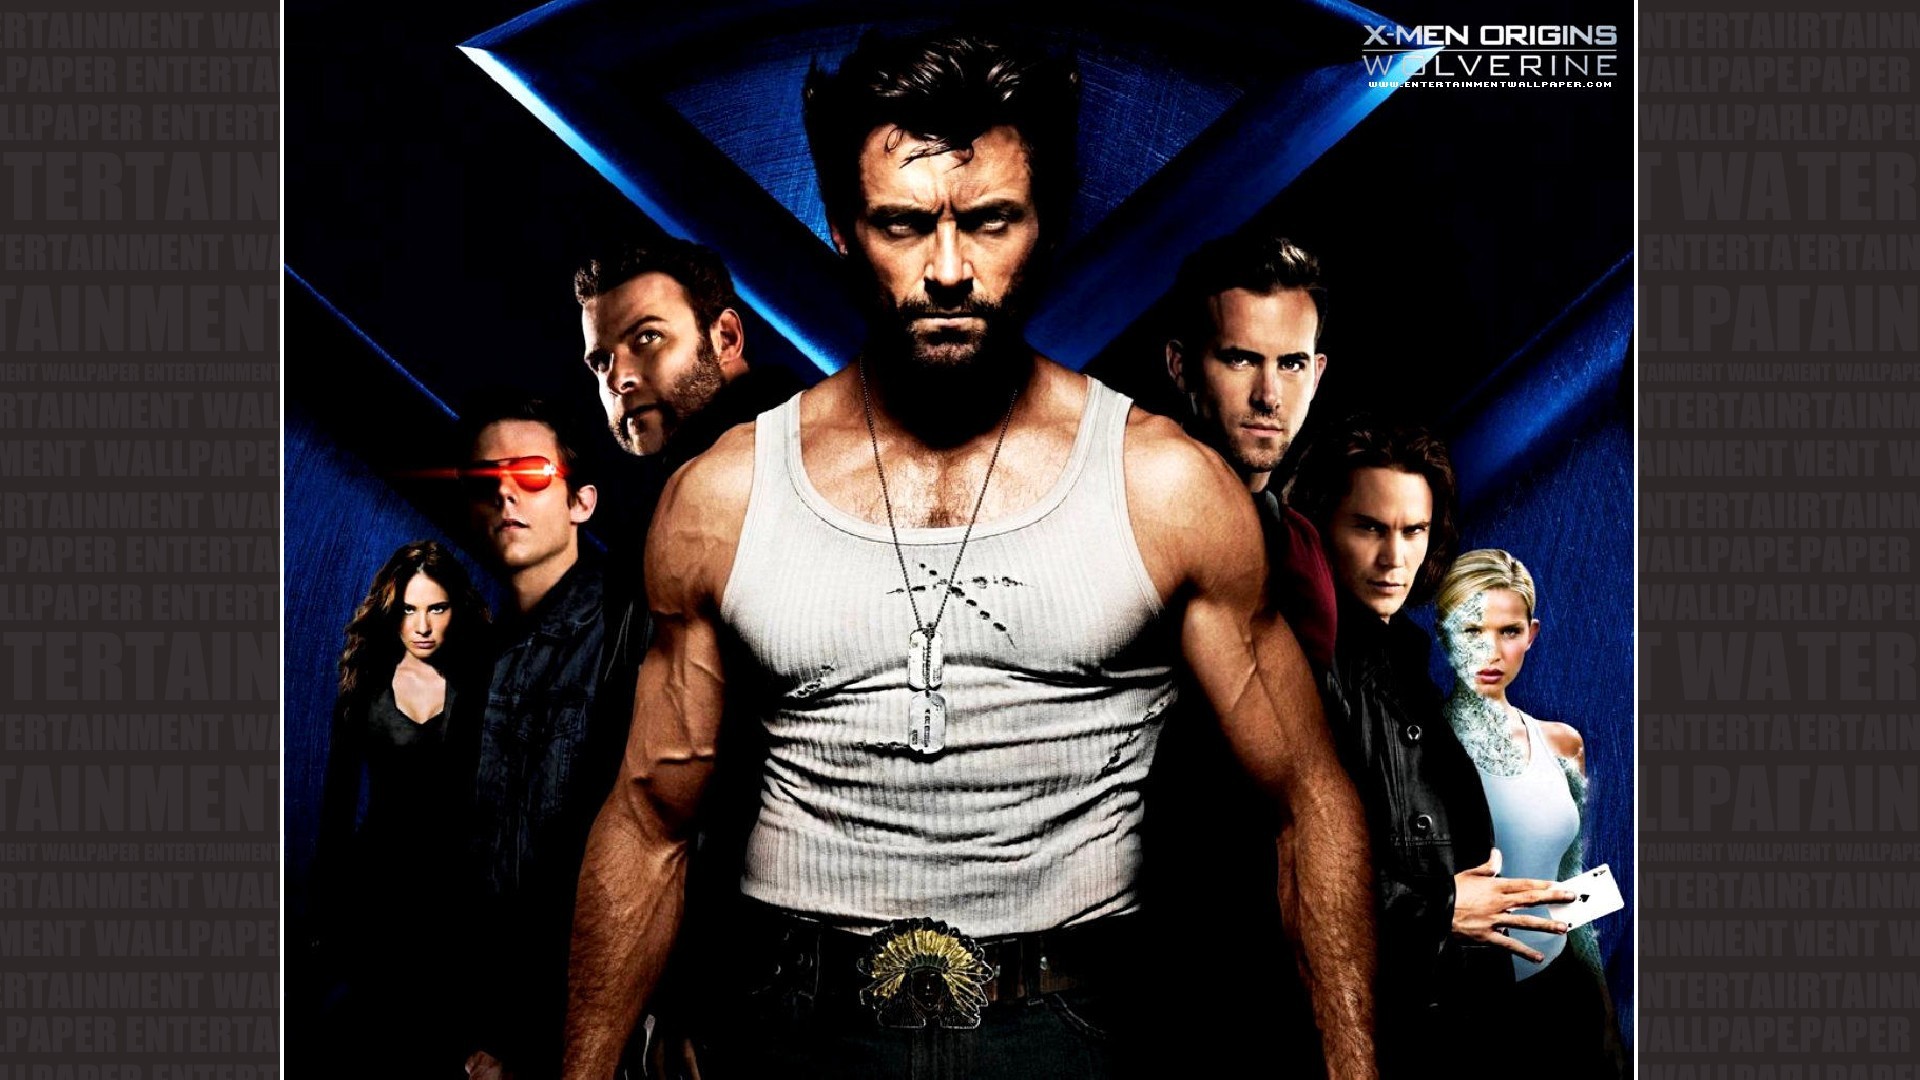 1920x1080 X-Men Origins: Wolverine Wallpaper - Original size, download now.